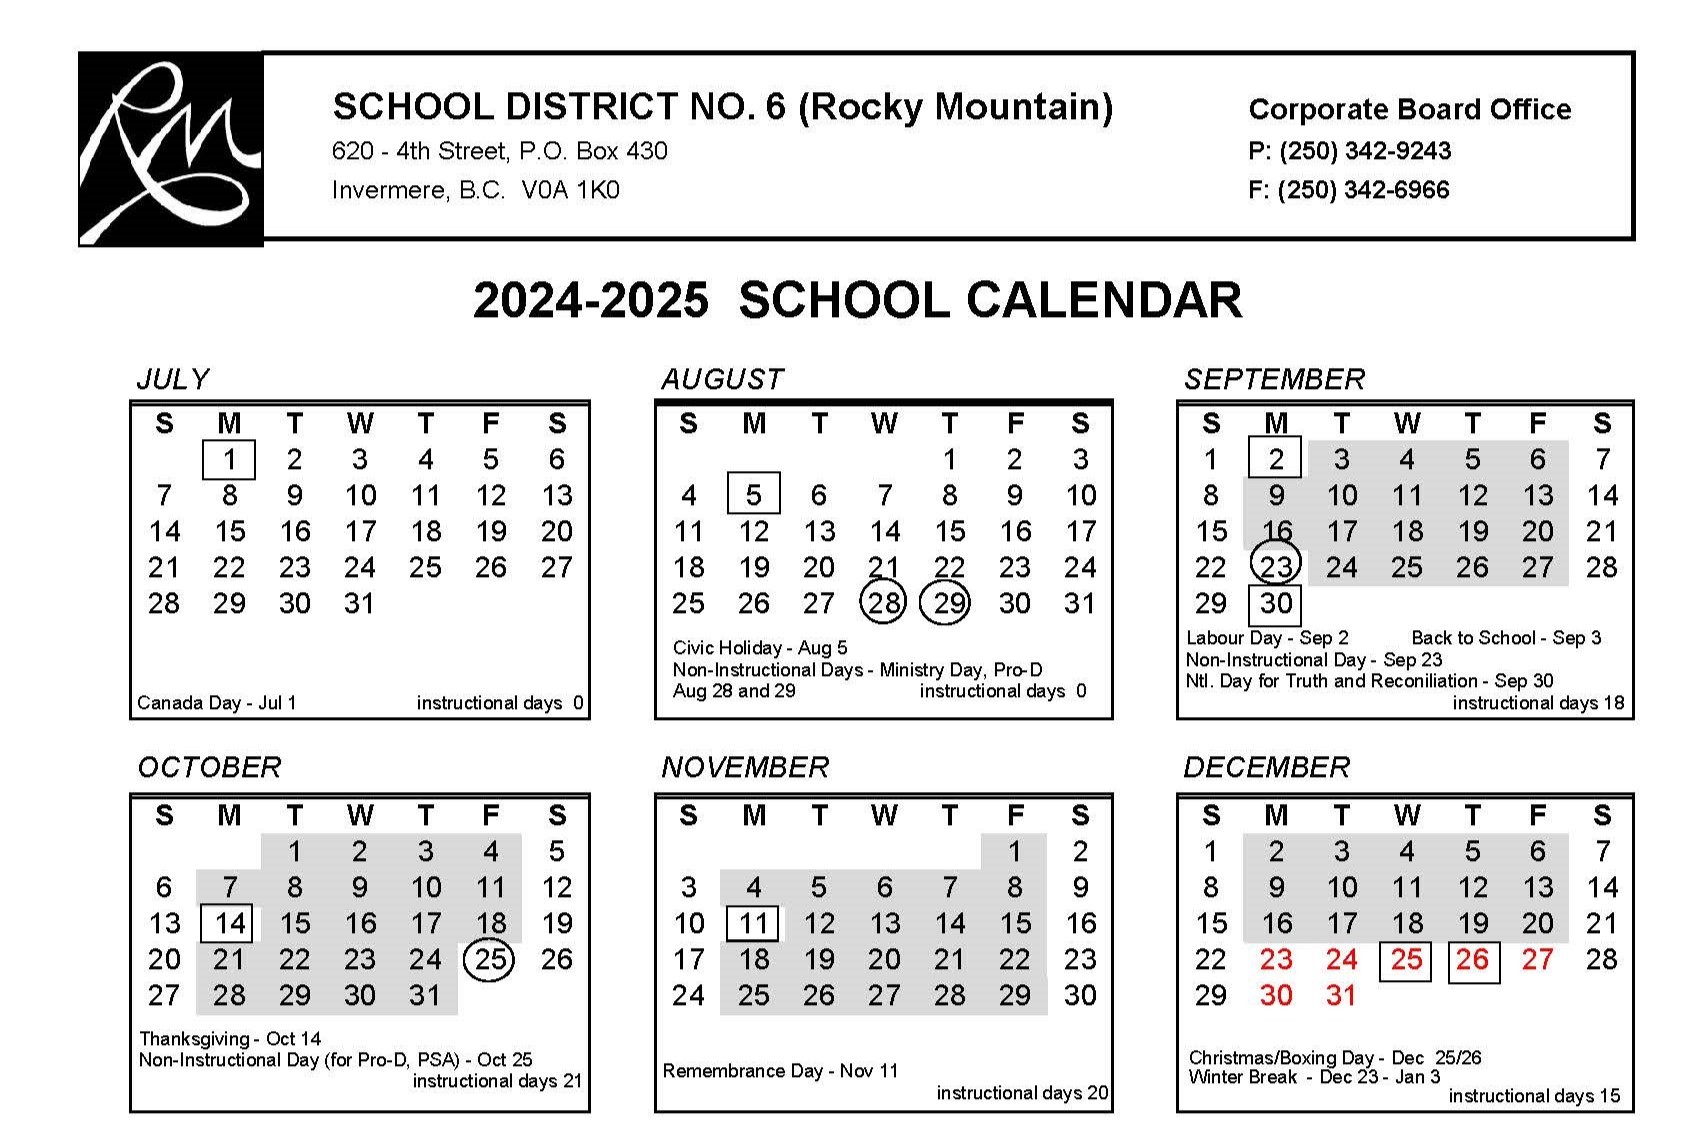 202425 School Calendar Approved Rocky Mountain School District No. 6